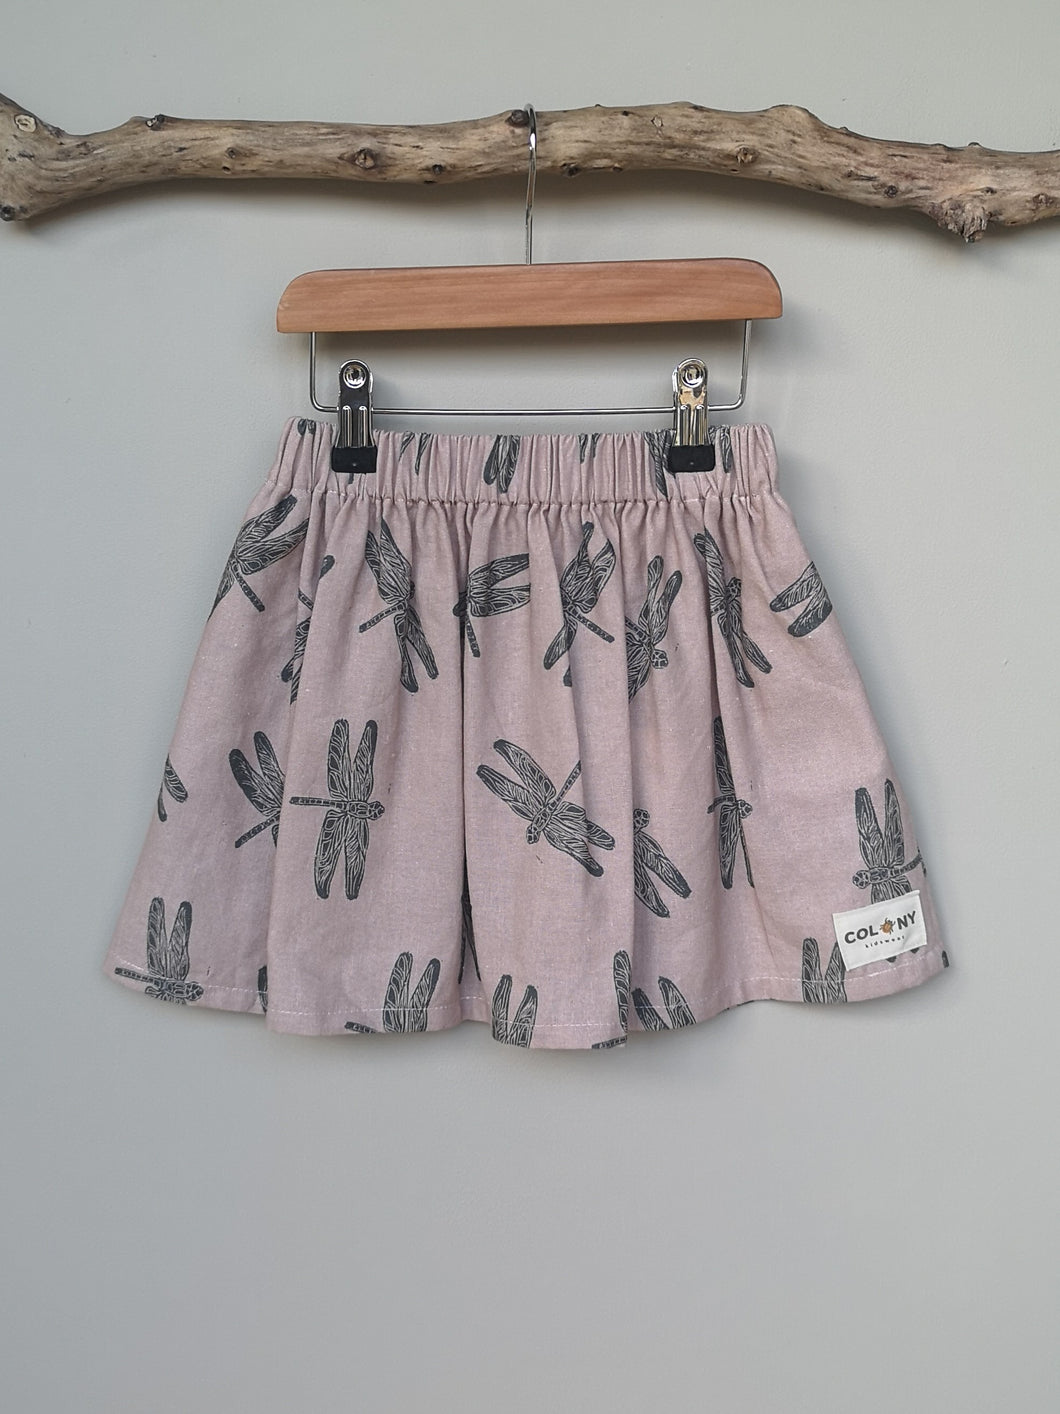 Dragonfly Print Linen/Cotton Children's Skirt